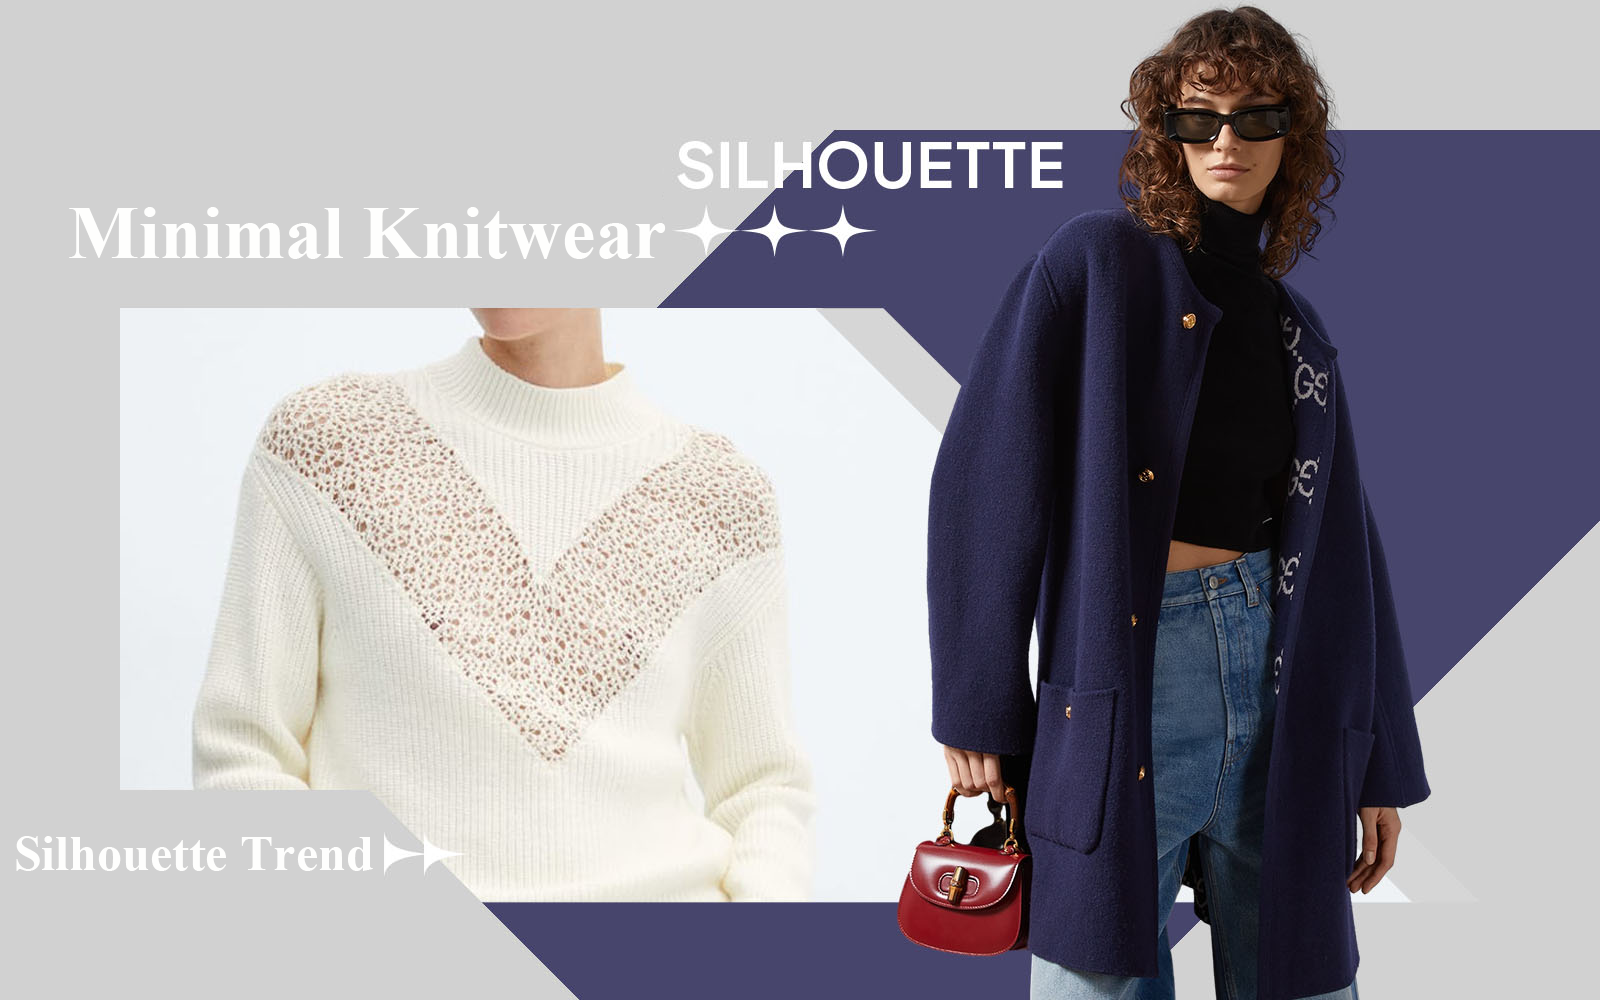 The Silhouette Trend for Women's Knitwear